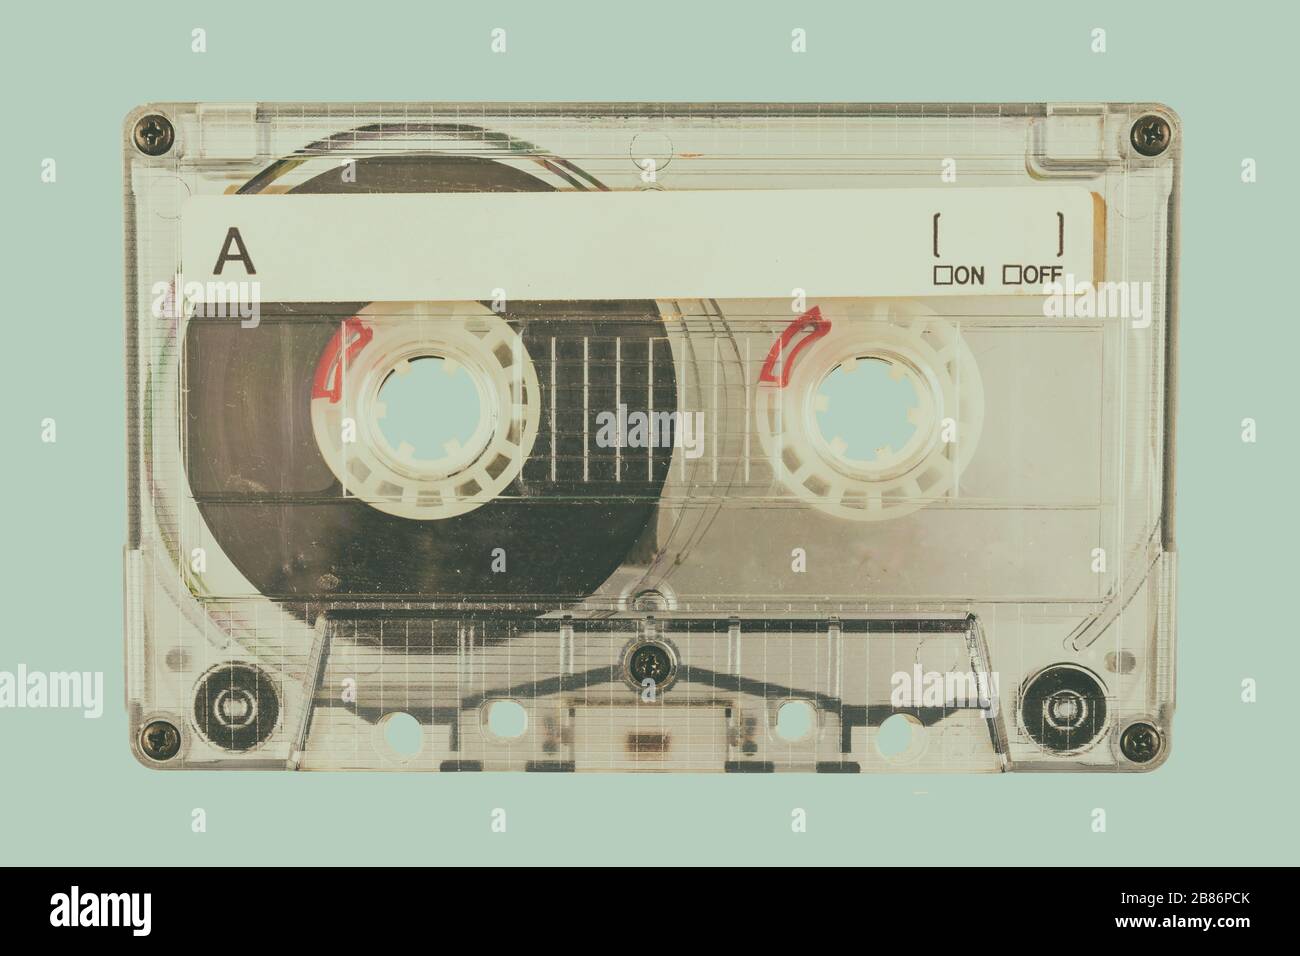 Imagen de estilo retro de un cassette compacto de audio antiguo Foto de stock